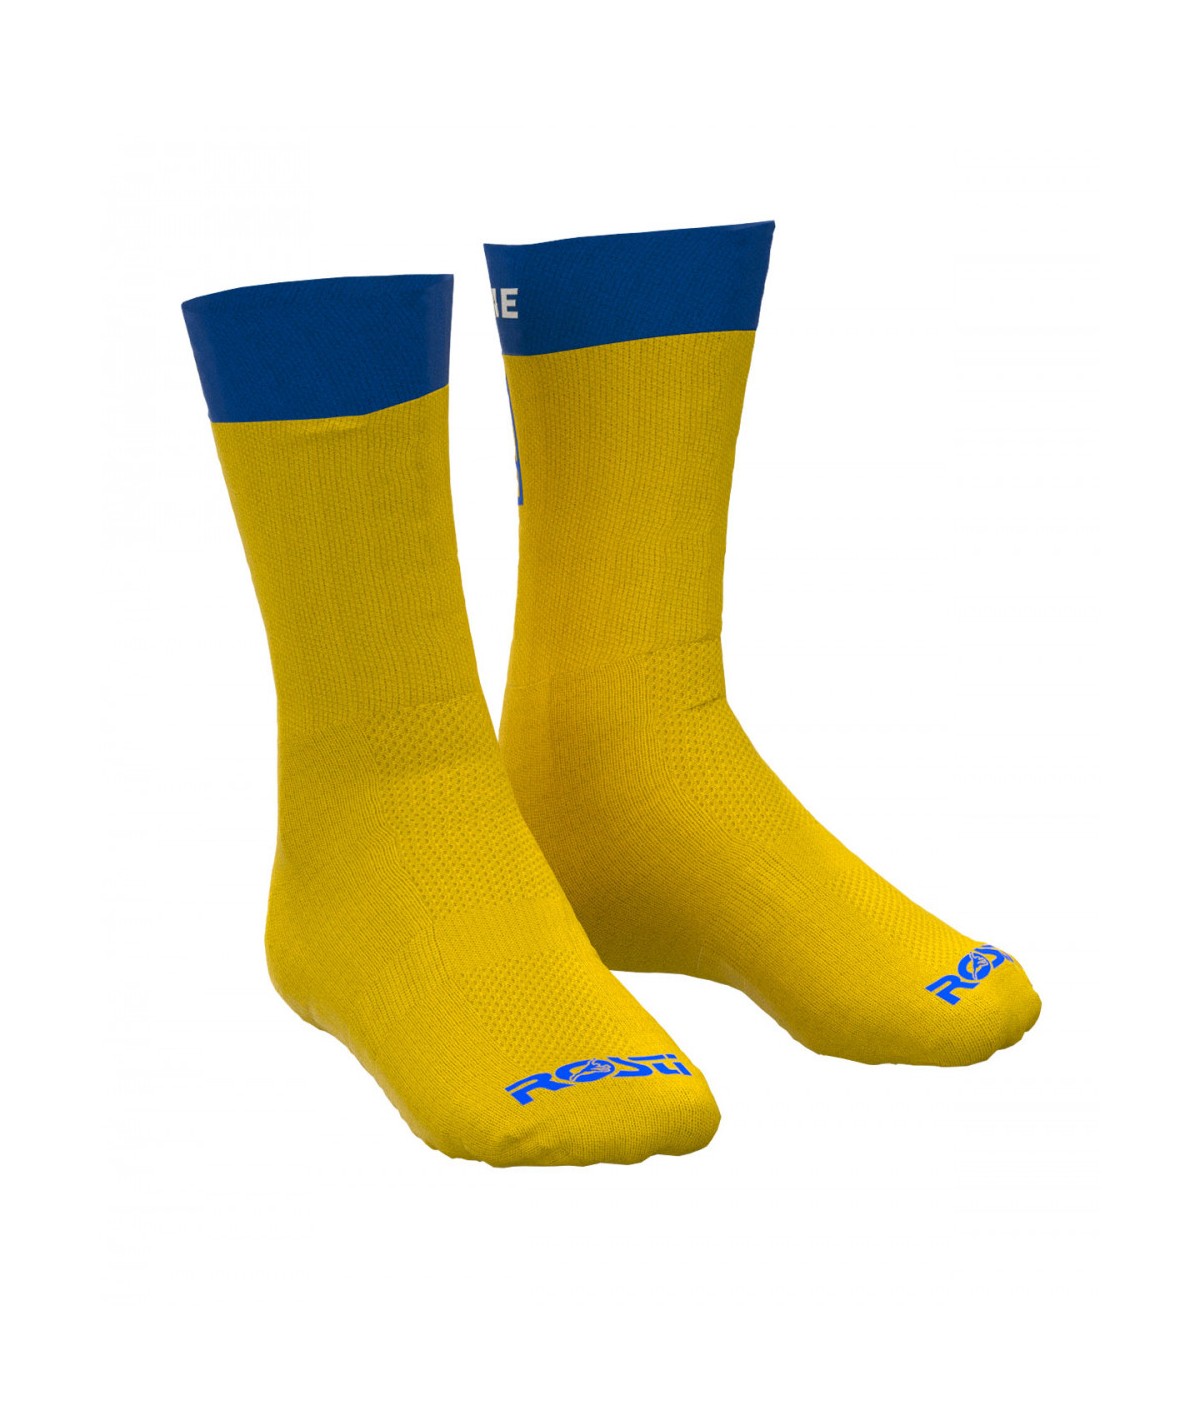 Ukraine cycling socks